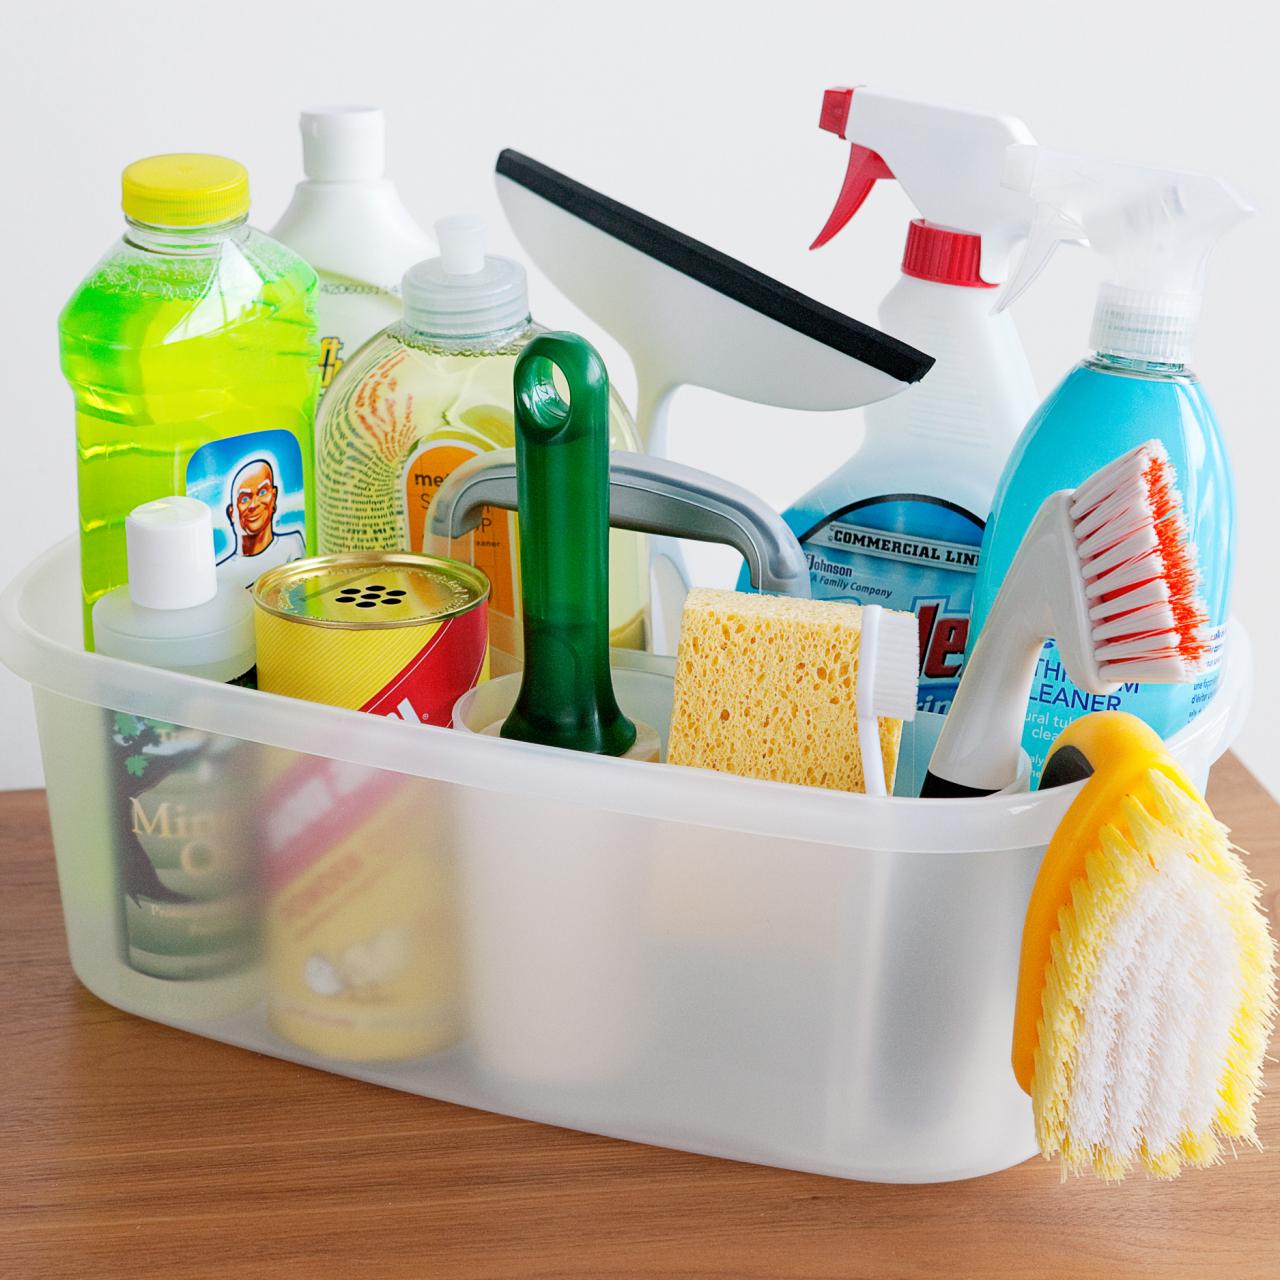 Organized Cleaning Caddy - Simply Organized